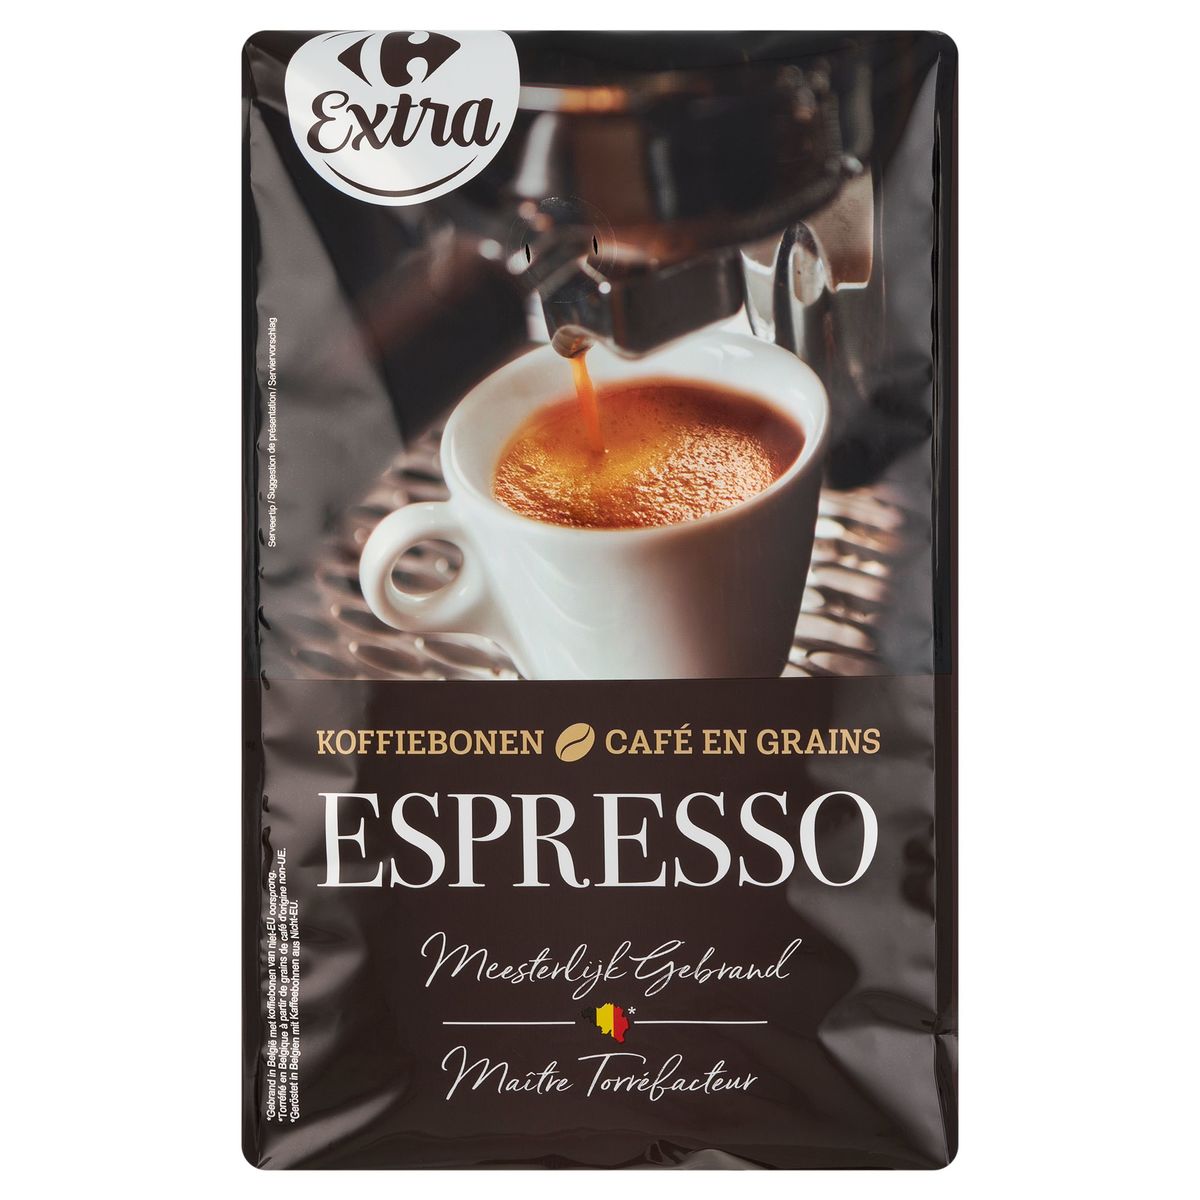 Carrefour Extra Café en Grains Espresso 1 kg